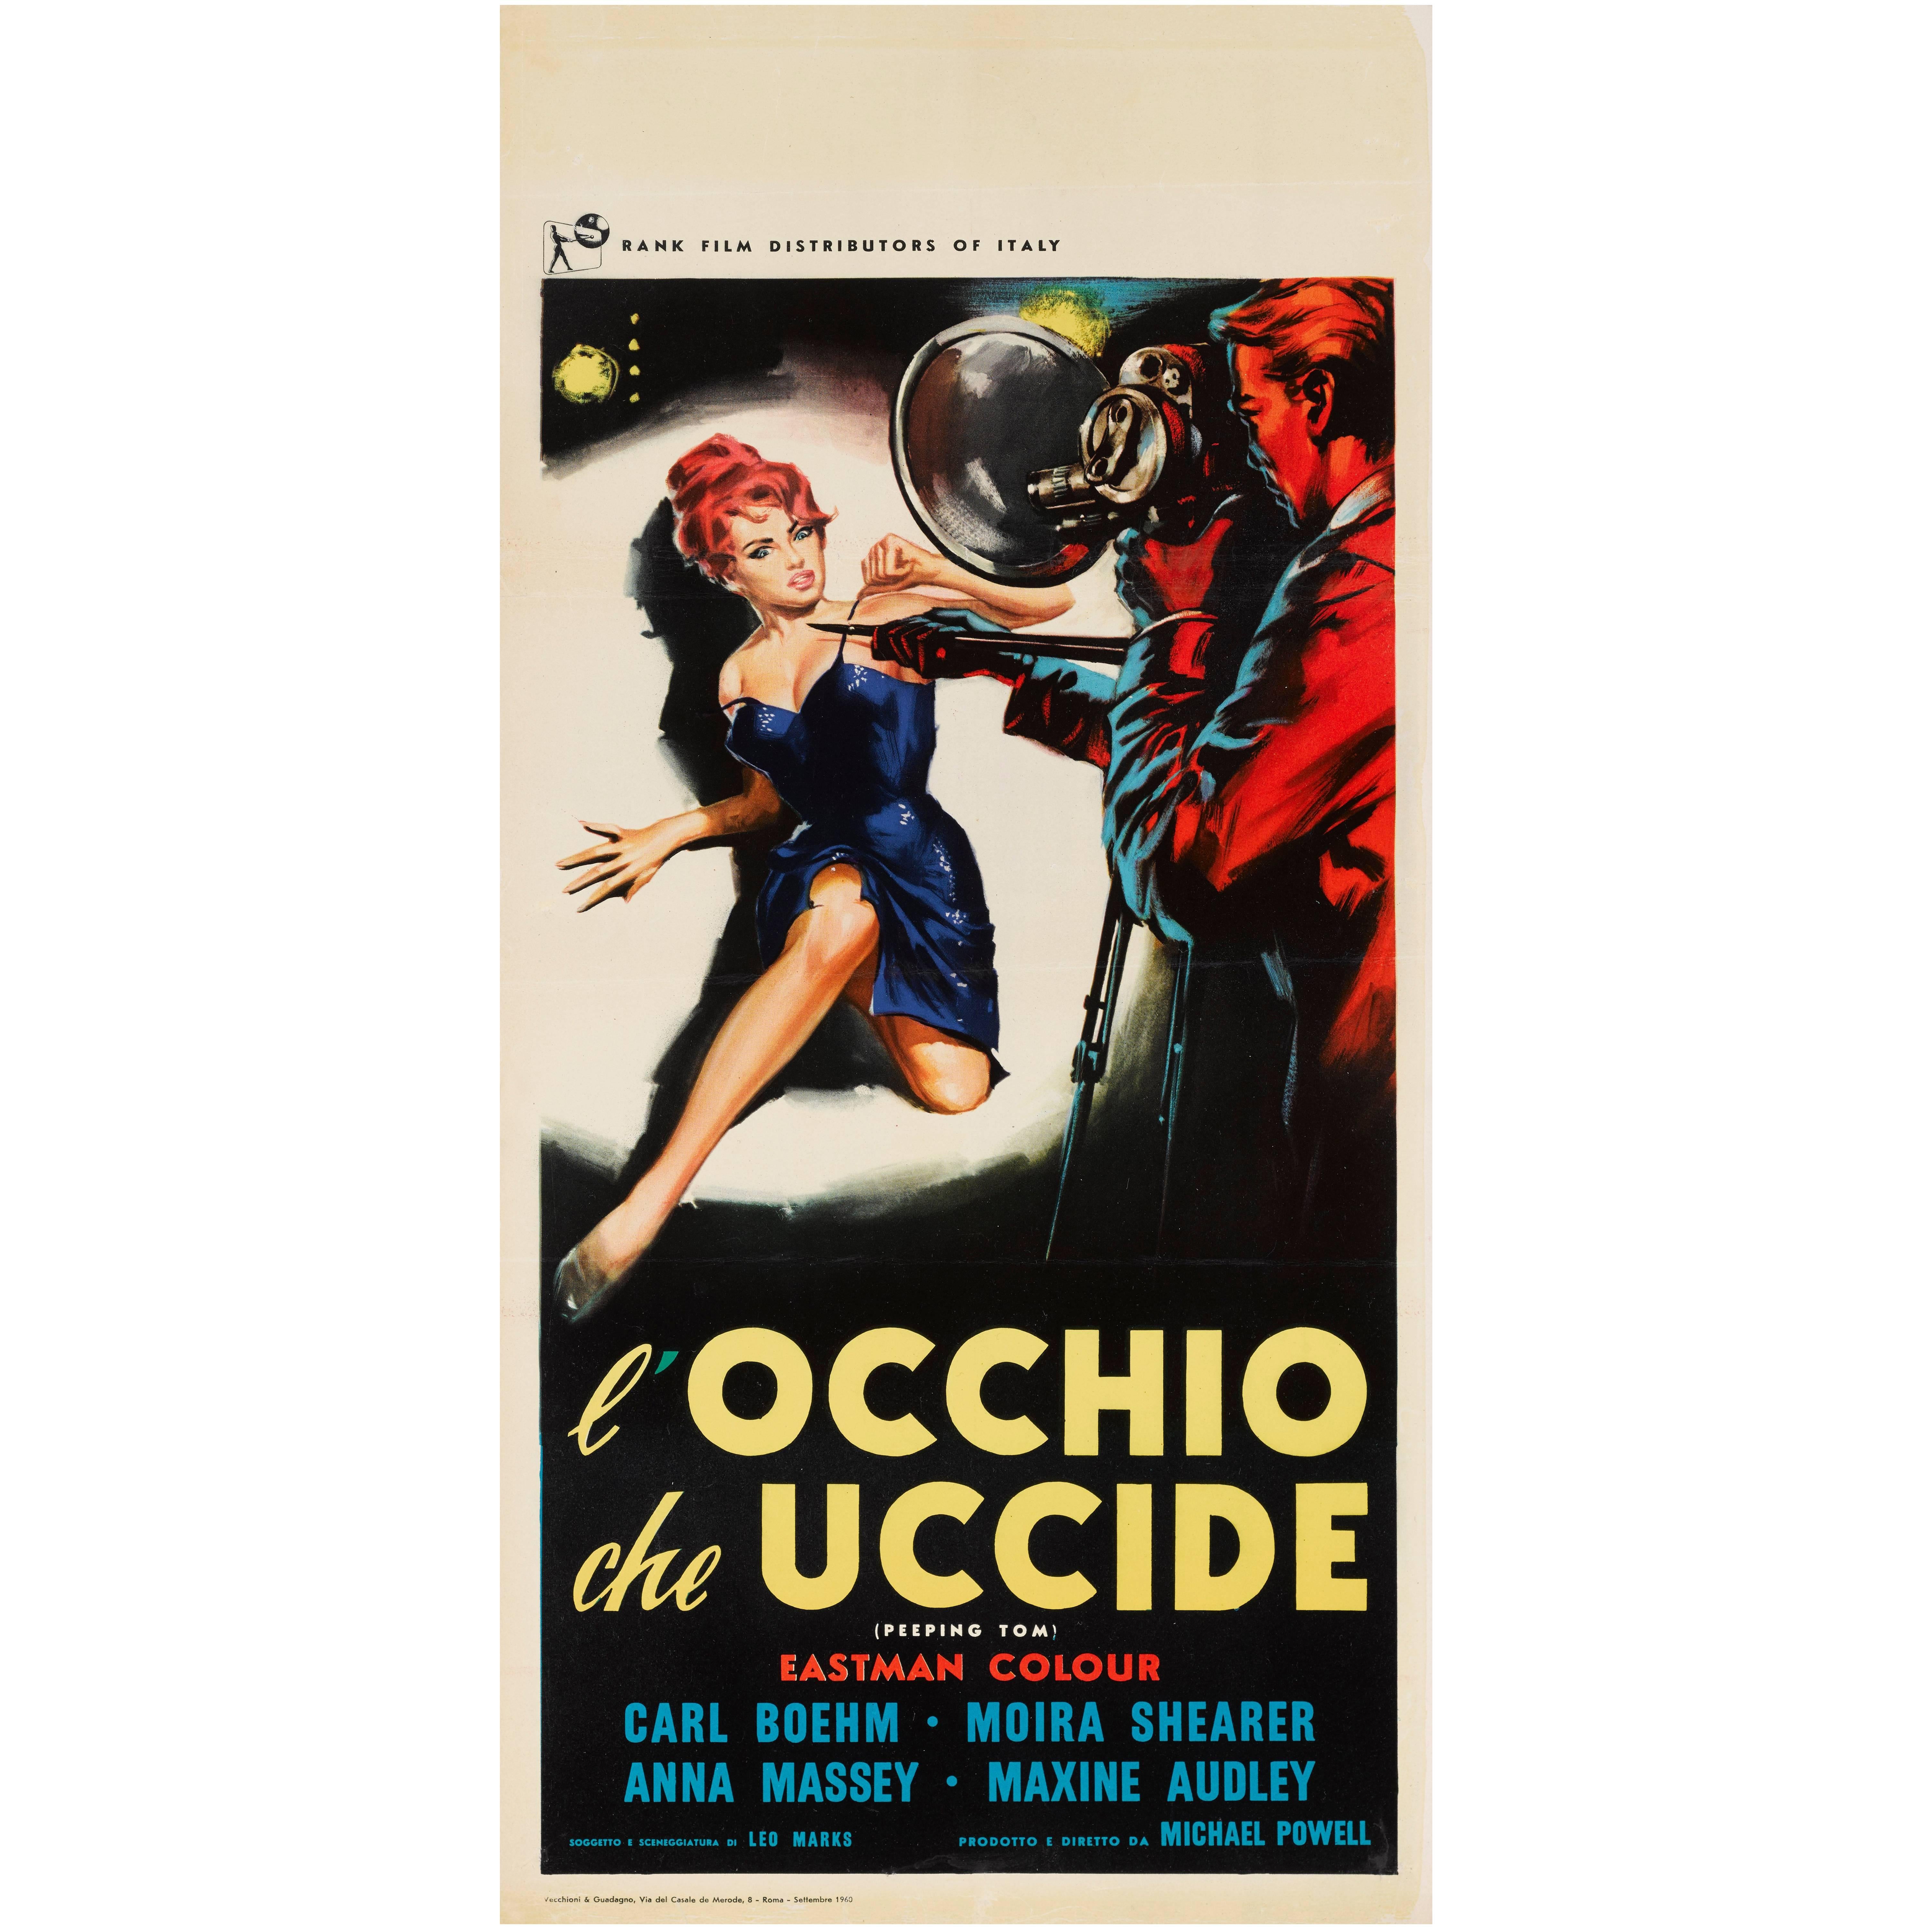 "Peeping Tom / L'Occhio Che Uccide" Original Italian Film Poster